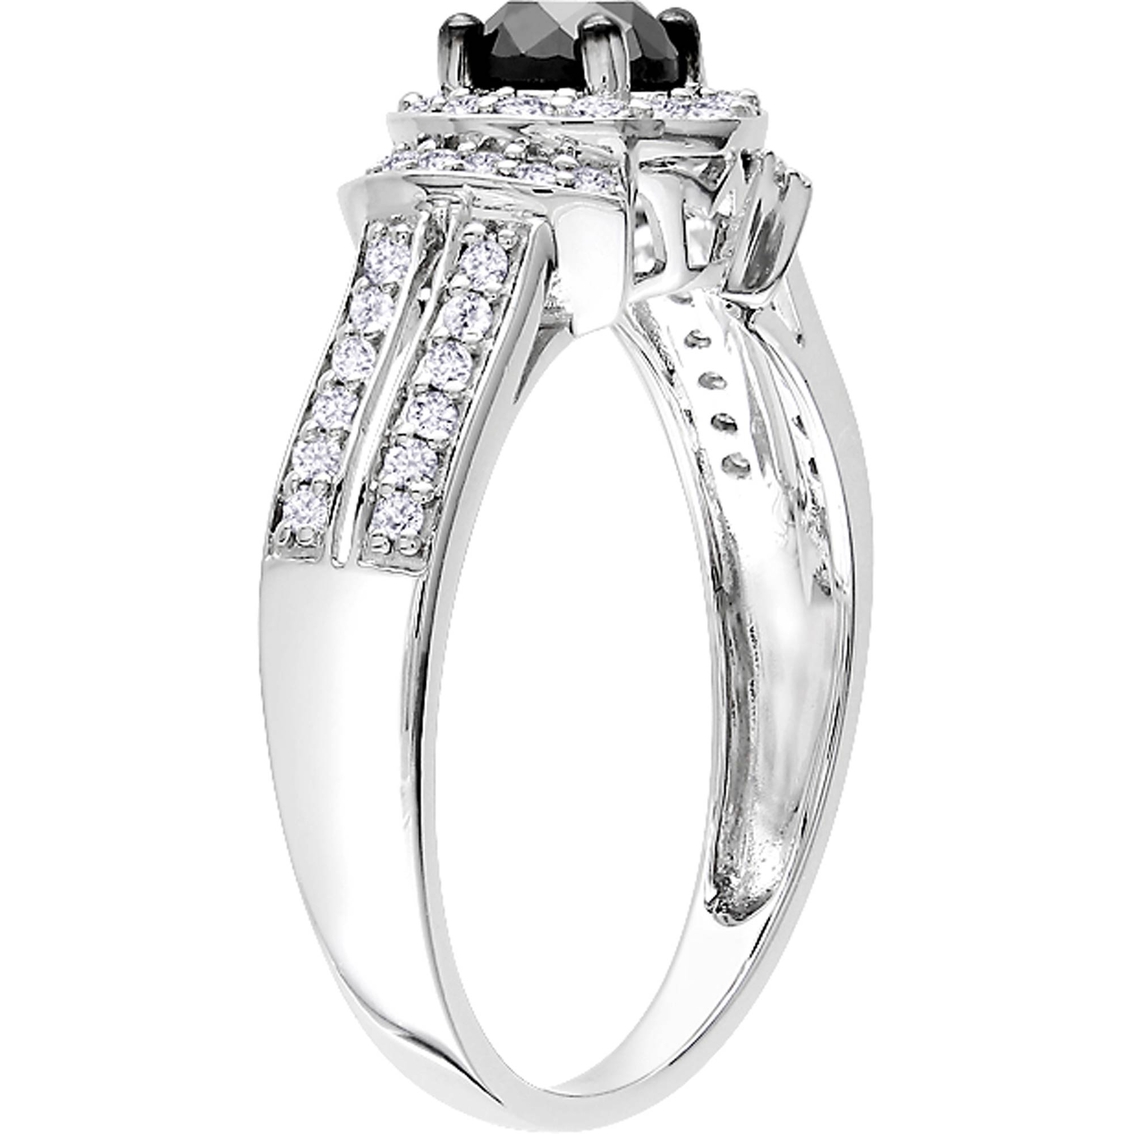 Diamore 14K White Gold 1 CTW Black and White Diamond Halo Engagement Ring - Image 2 of 2